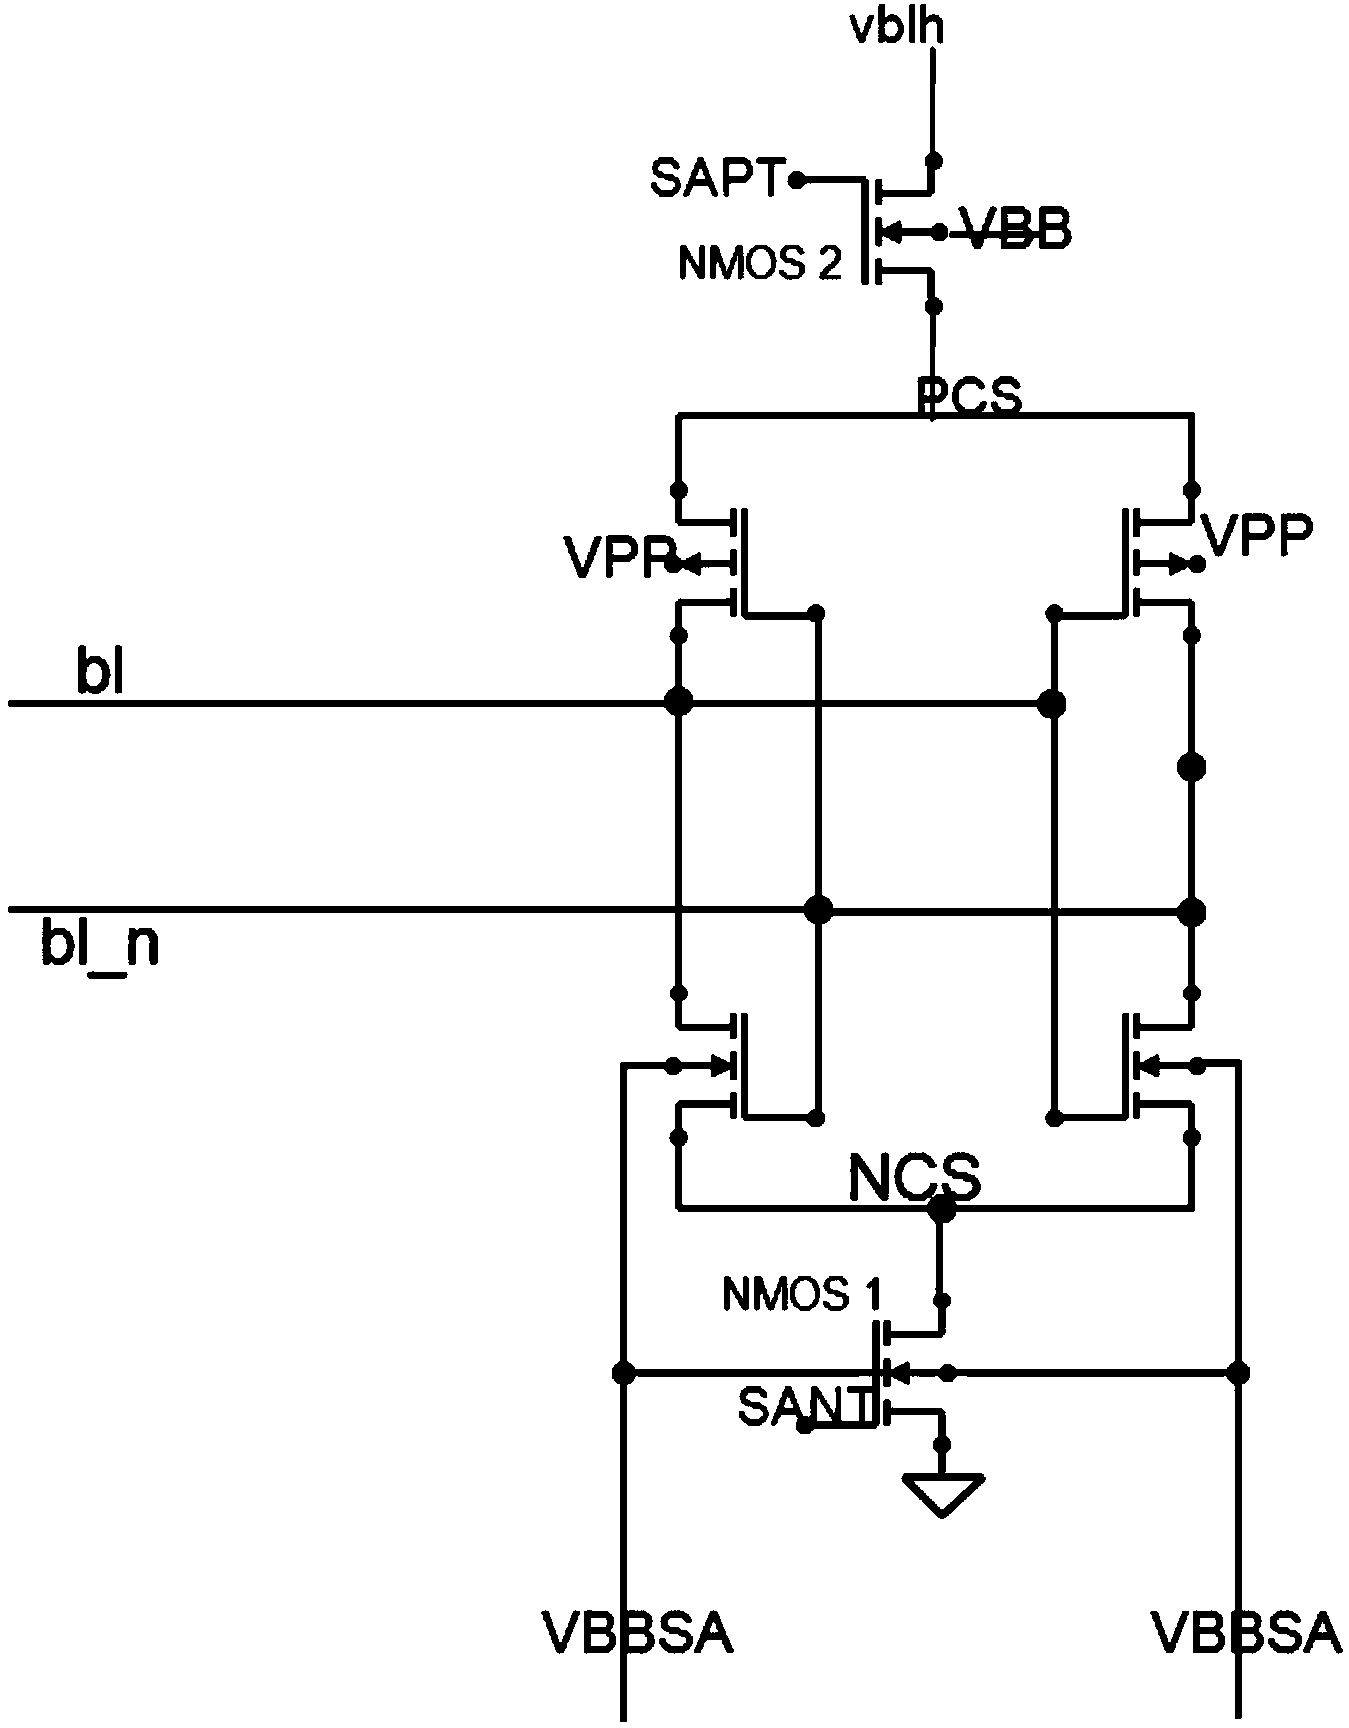 Method for accelerating DRAM (dynamic random access memory) sensitive amplifier